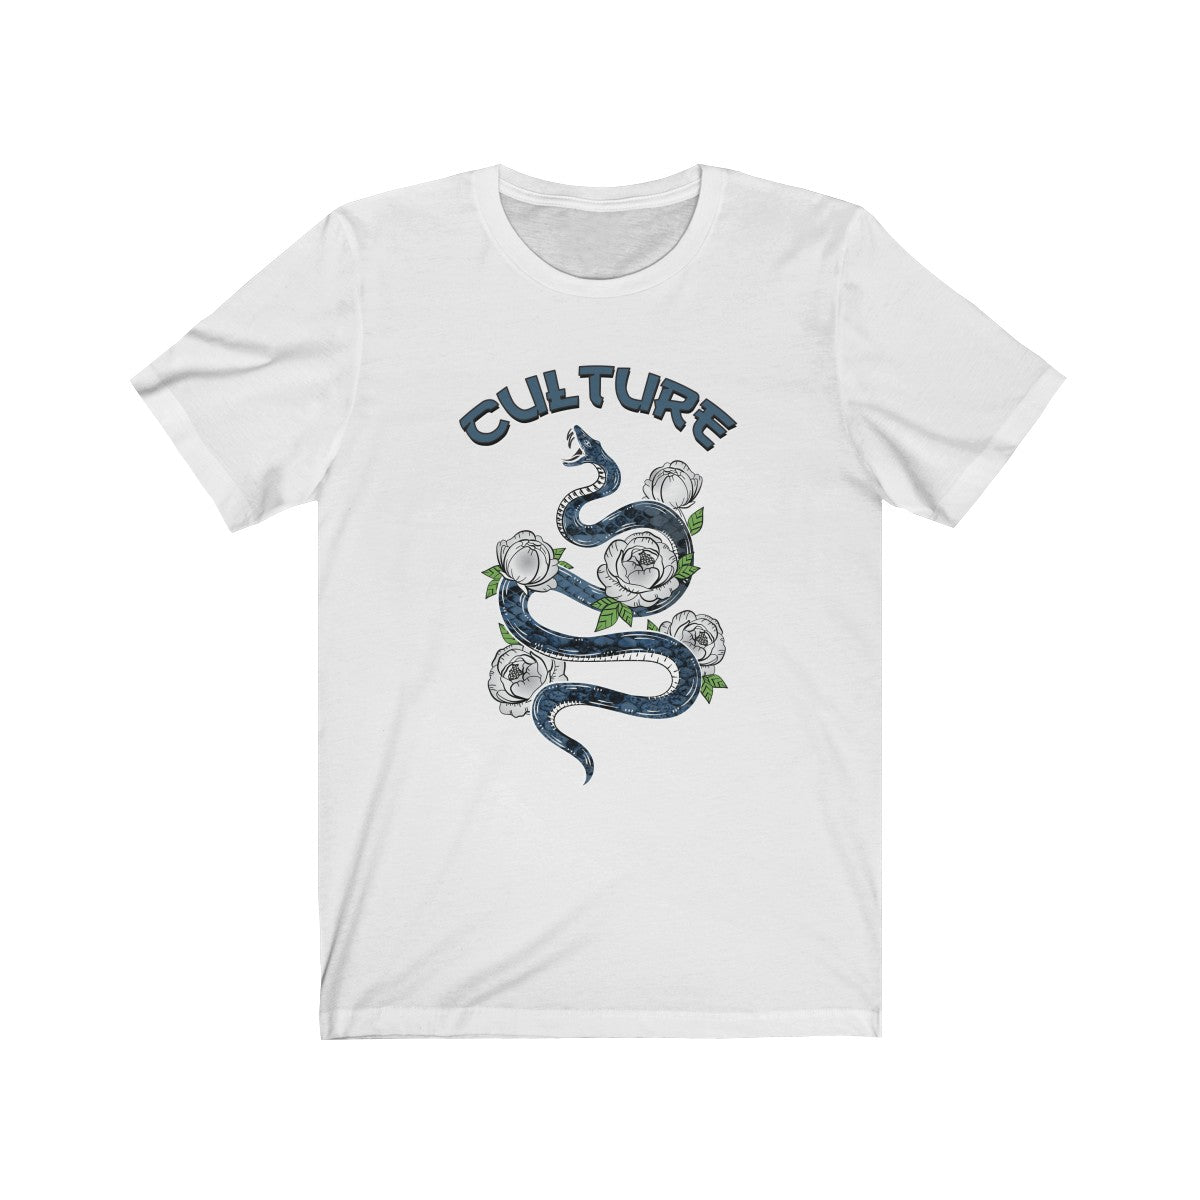 'Culture Snake' Short Sleeve Tee